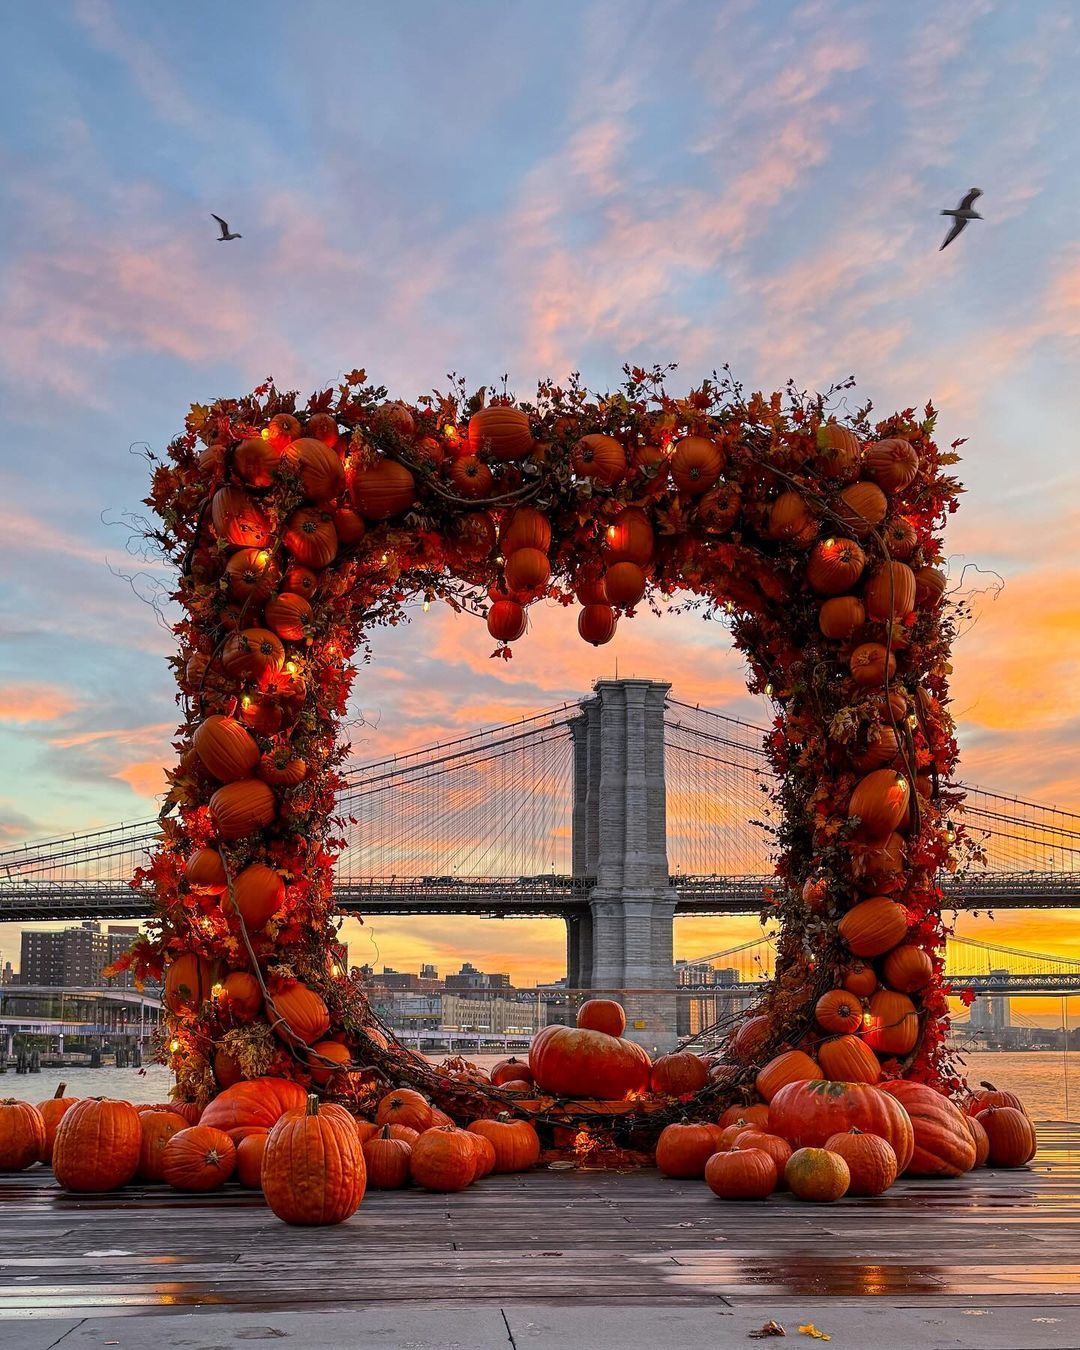 Adding a bit of pumpkin spice to NYC sunrises   #TheSeaport